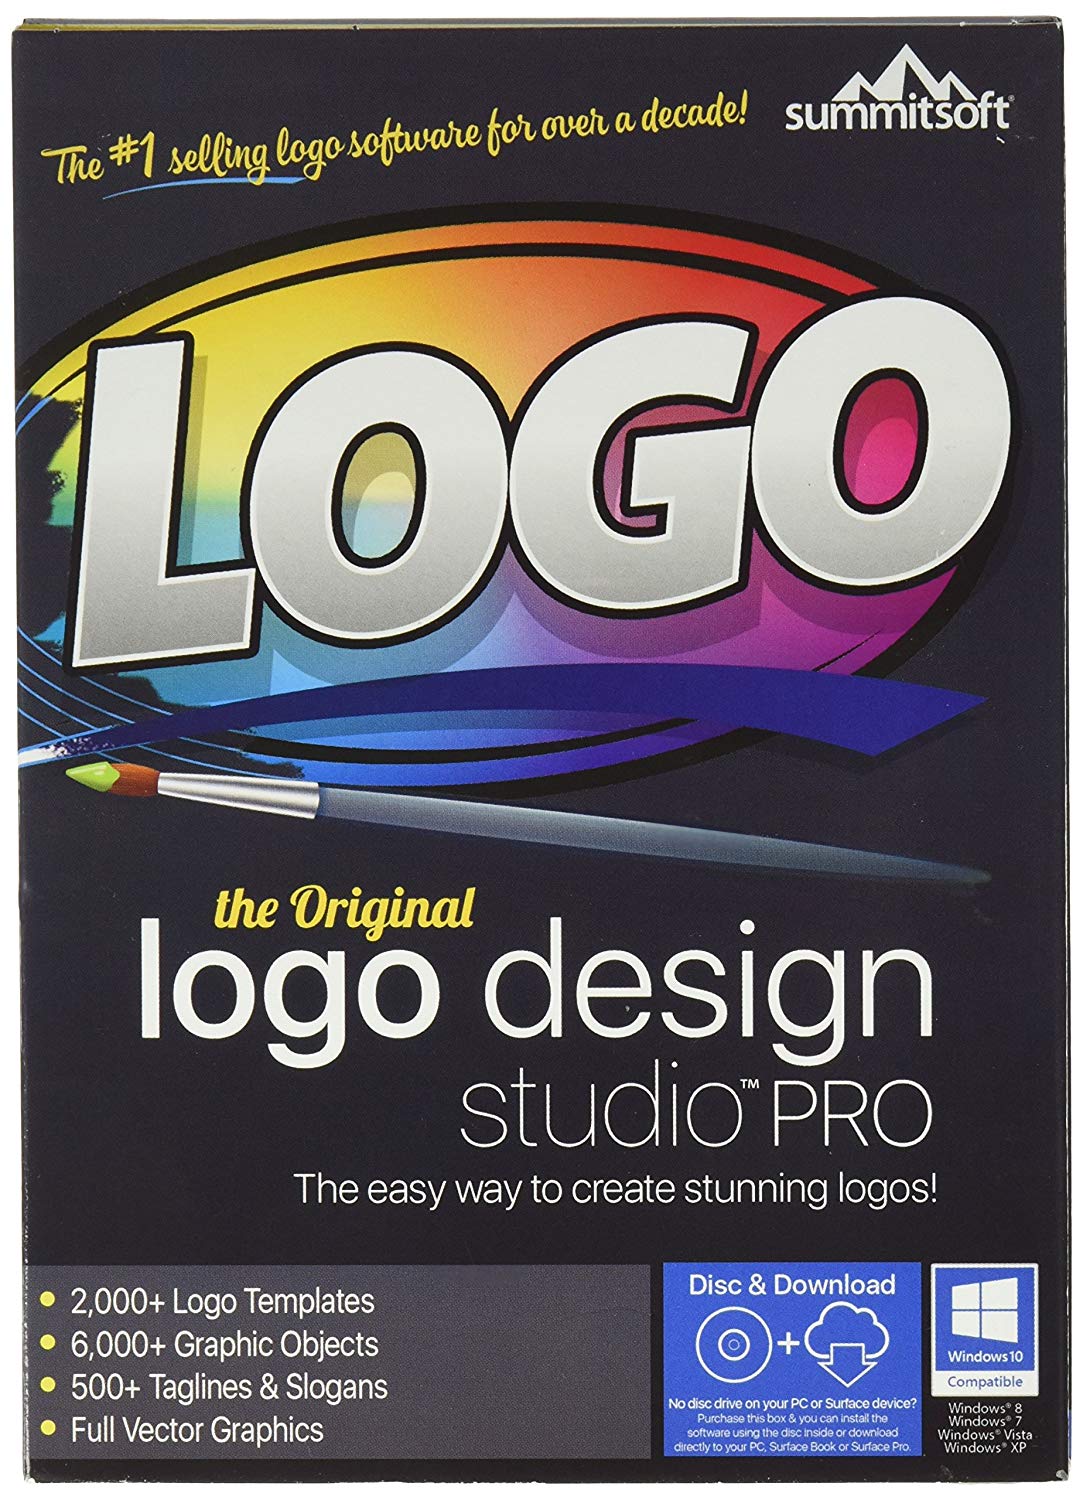 PC Software Logo - Logo Design Studio Pro: Software